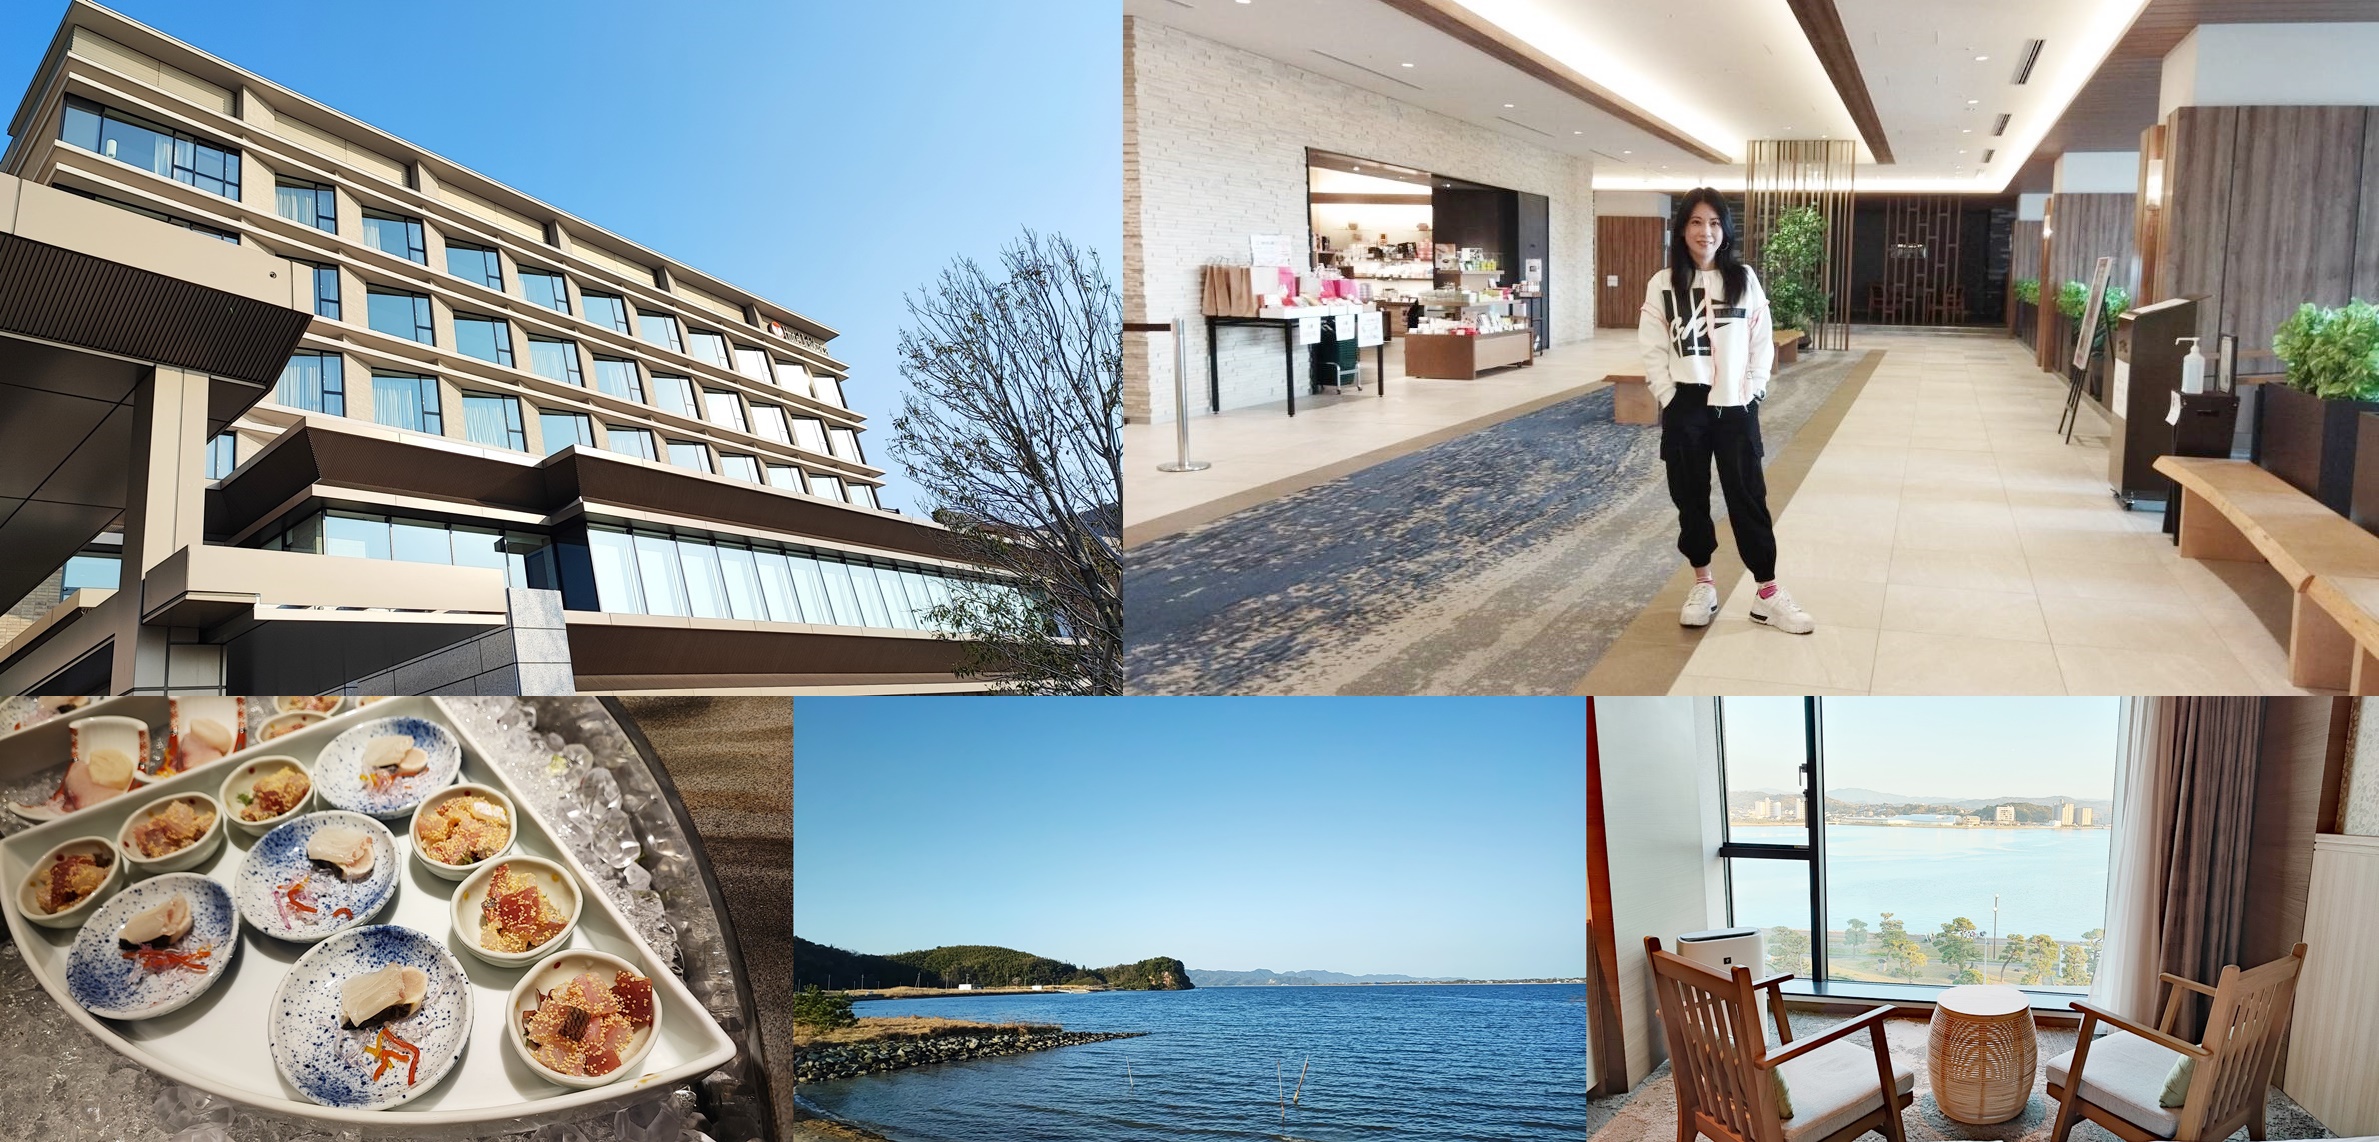 Shimane Ken,Shinjiko,一畑酒店Hotel Ichibata,宍道湖,山陰,島根縣,日本旅遊